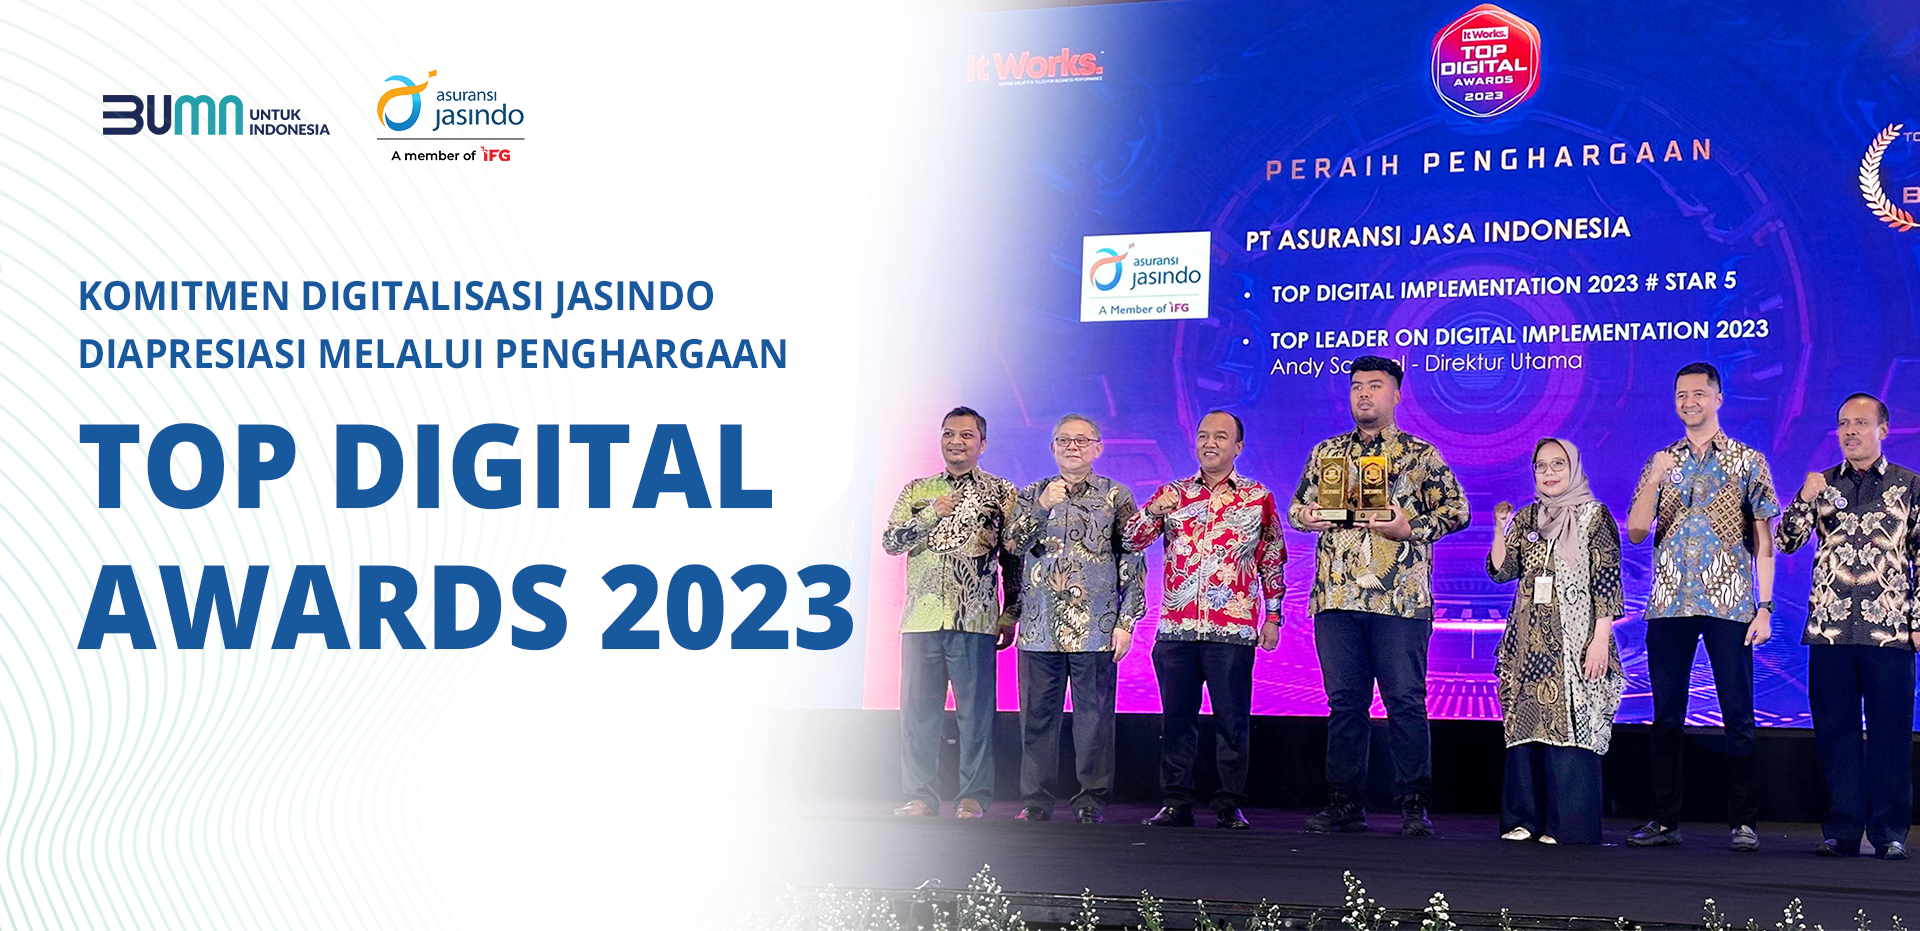 Komitmen Digitalisasi Jasindo Diapresiasi Melalui Penghargaan TOP Digital Awards 2023